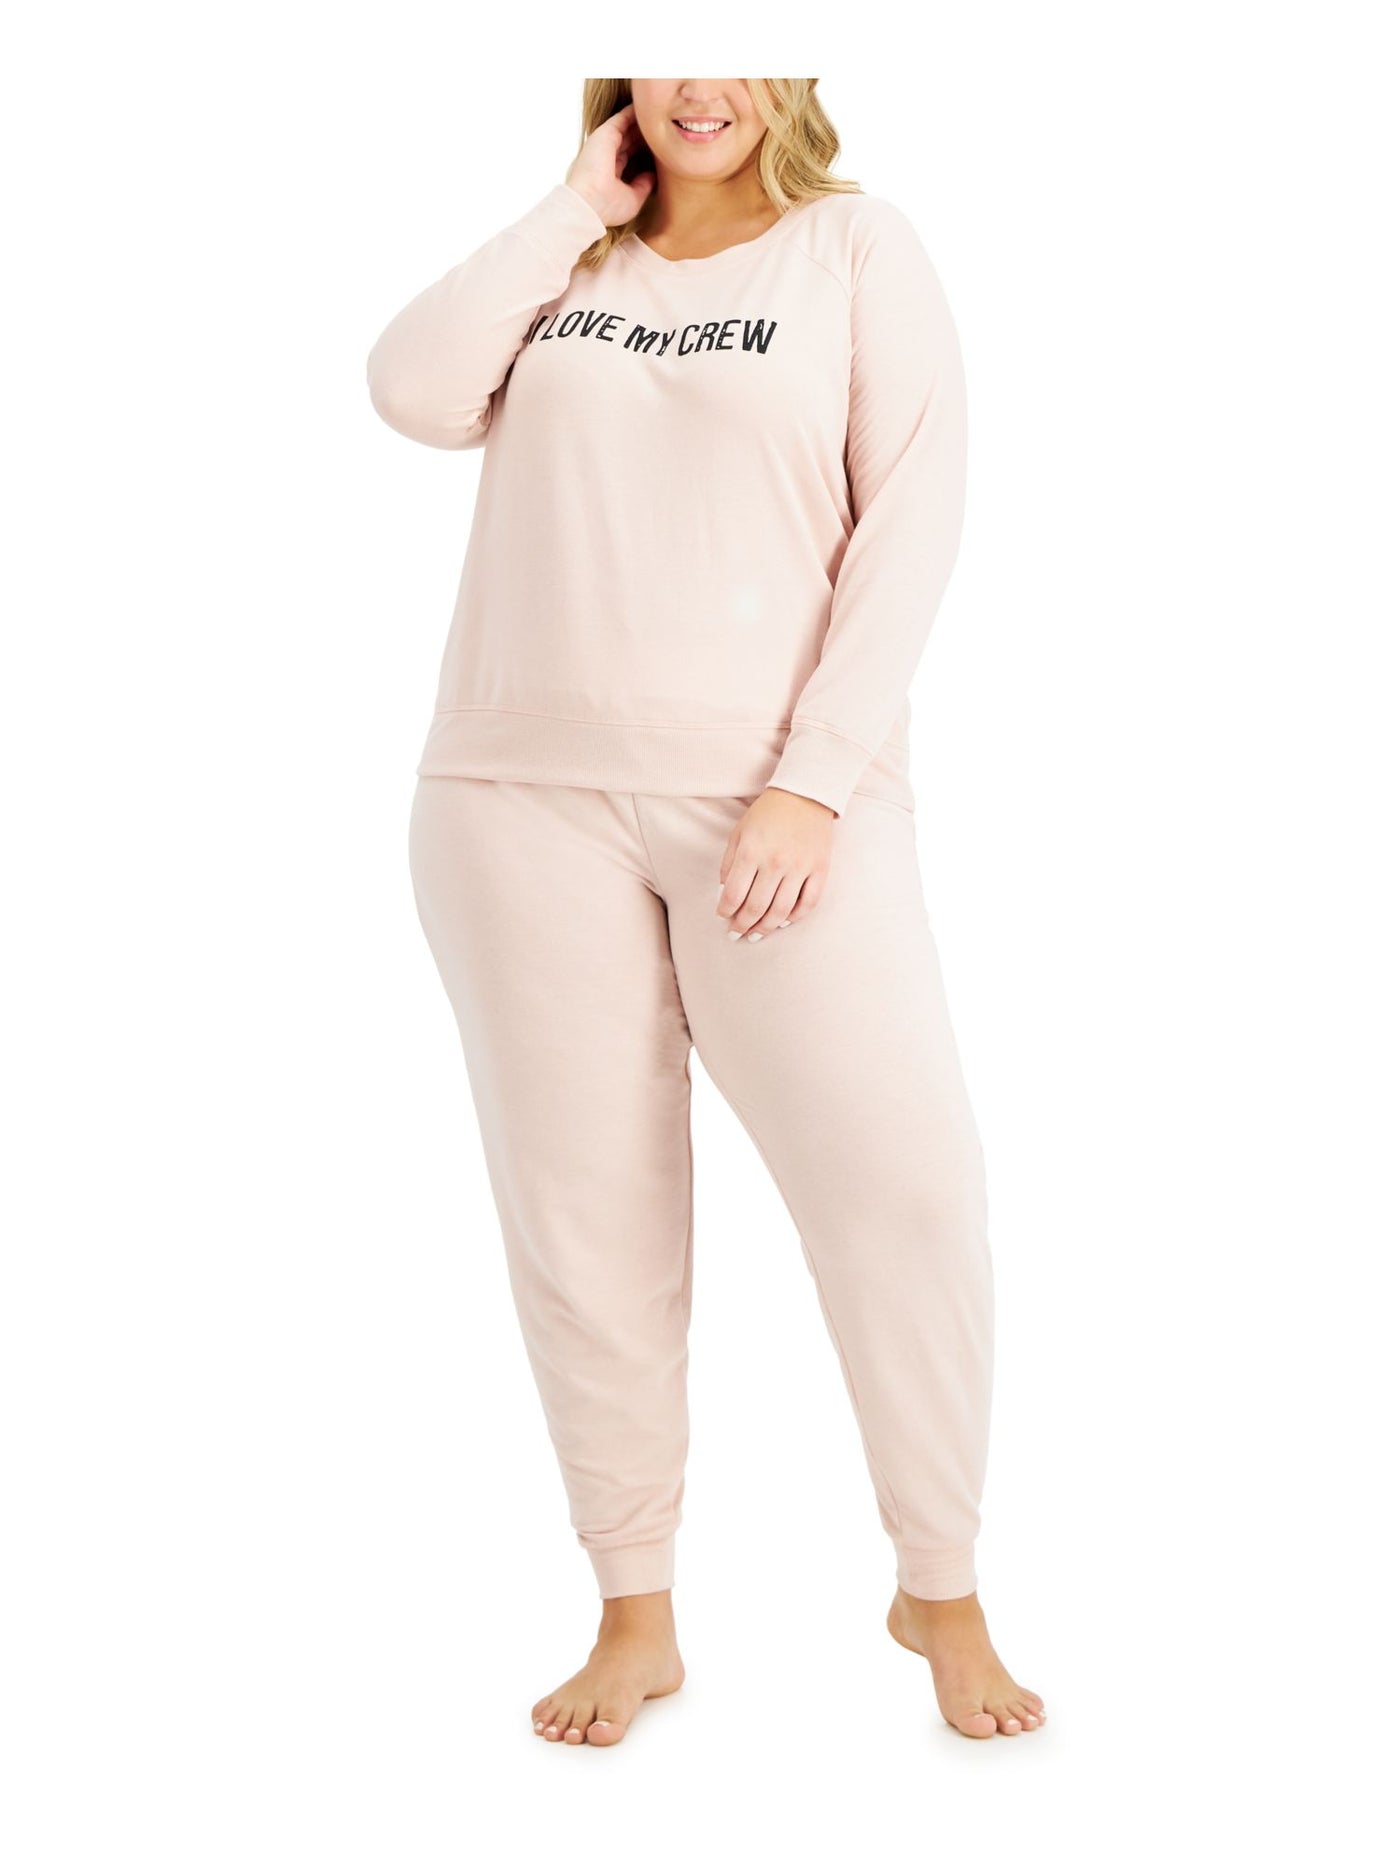 FAMILY PJs Womens Crew Love Pink Graphic Jogger Long Sleeve T-Shirt Top Cuffed Pants Pajamas Plus 3X